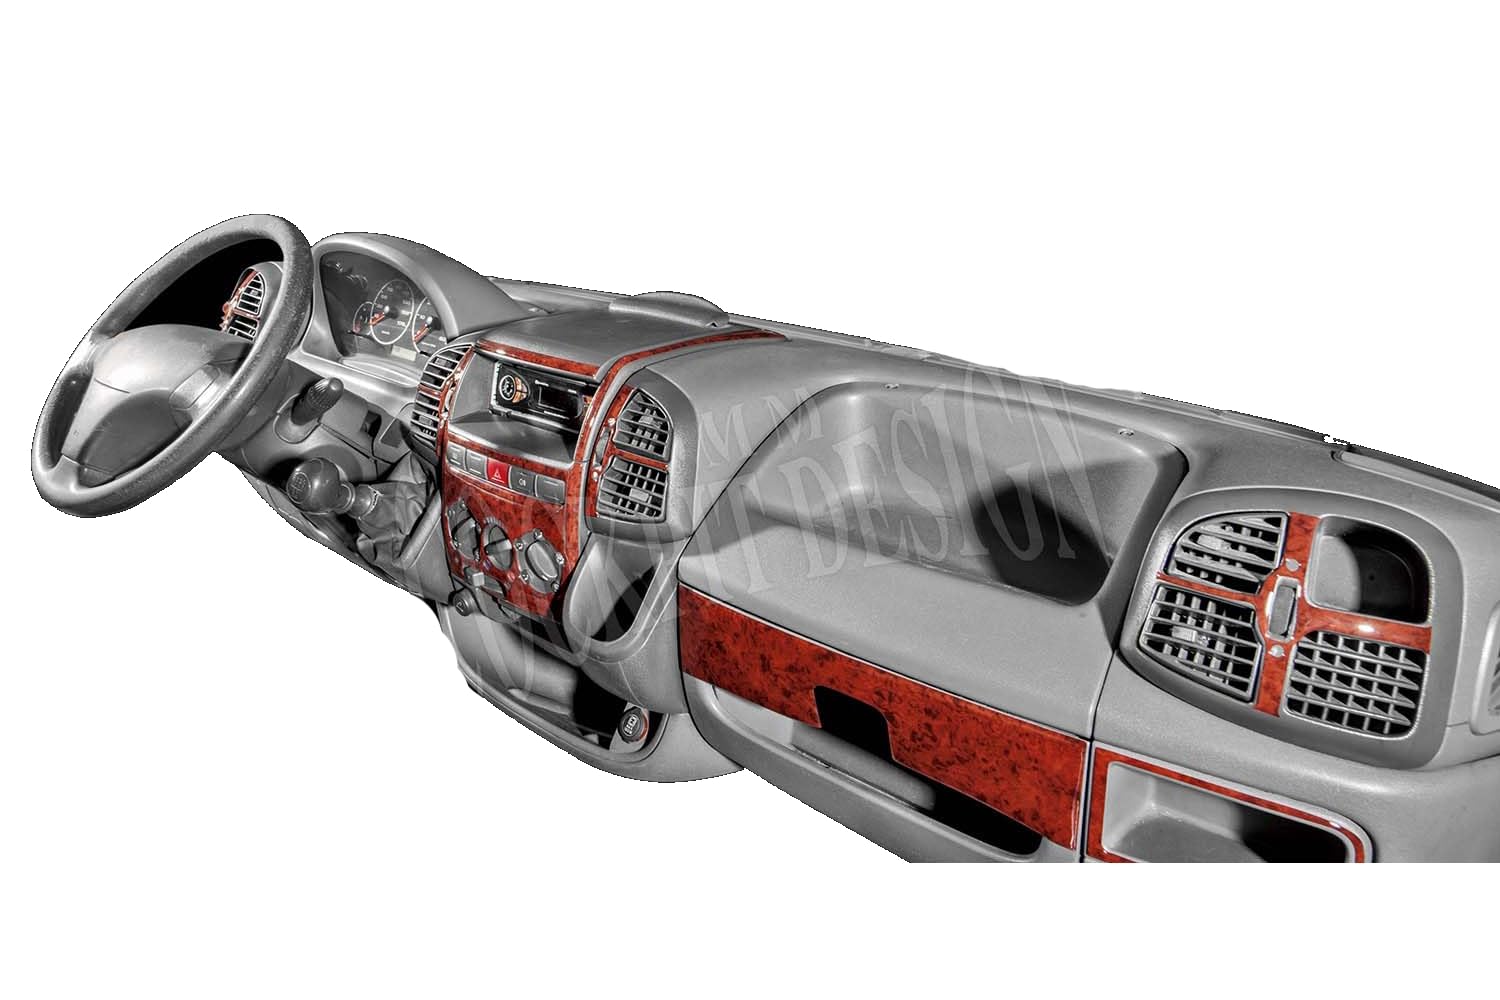 AUTOKLEIDUNG® Cockpit Dekor kompatibel mit Fiat Ducato Baujahr 03/2002-01/2006 15 Teile | 3D Klavierlack Optik von Autokleidung